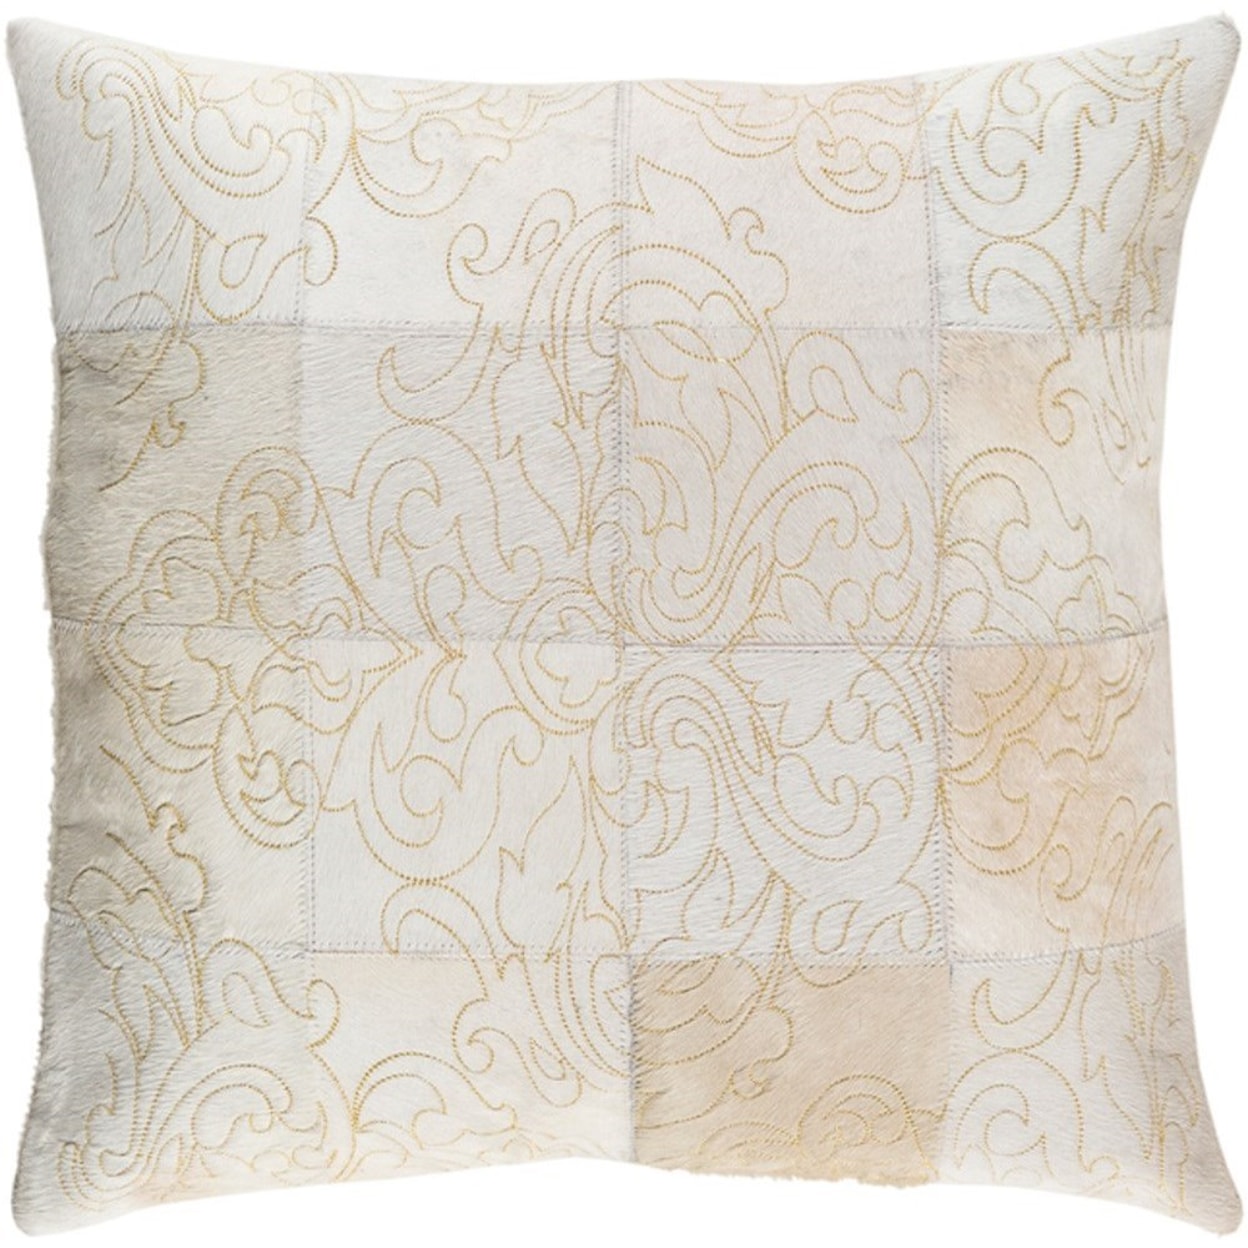 Surya Sophisticate Pillow